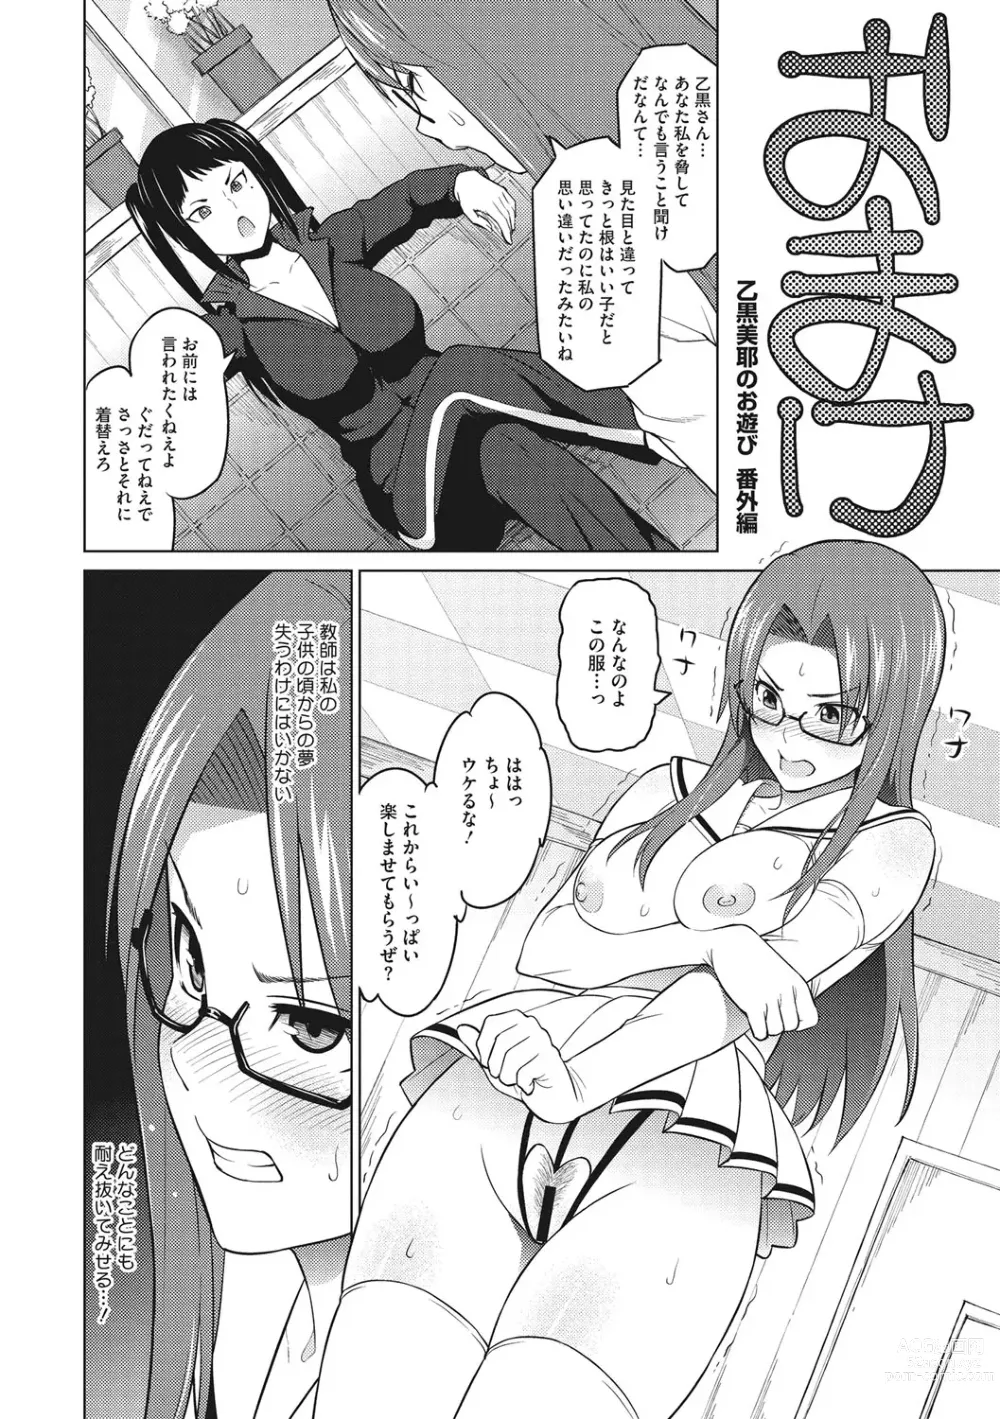 Page 192 of manga Risky Play